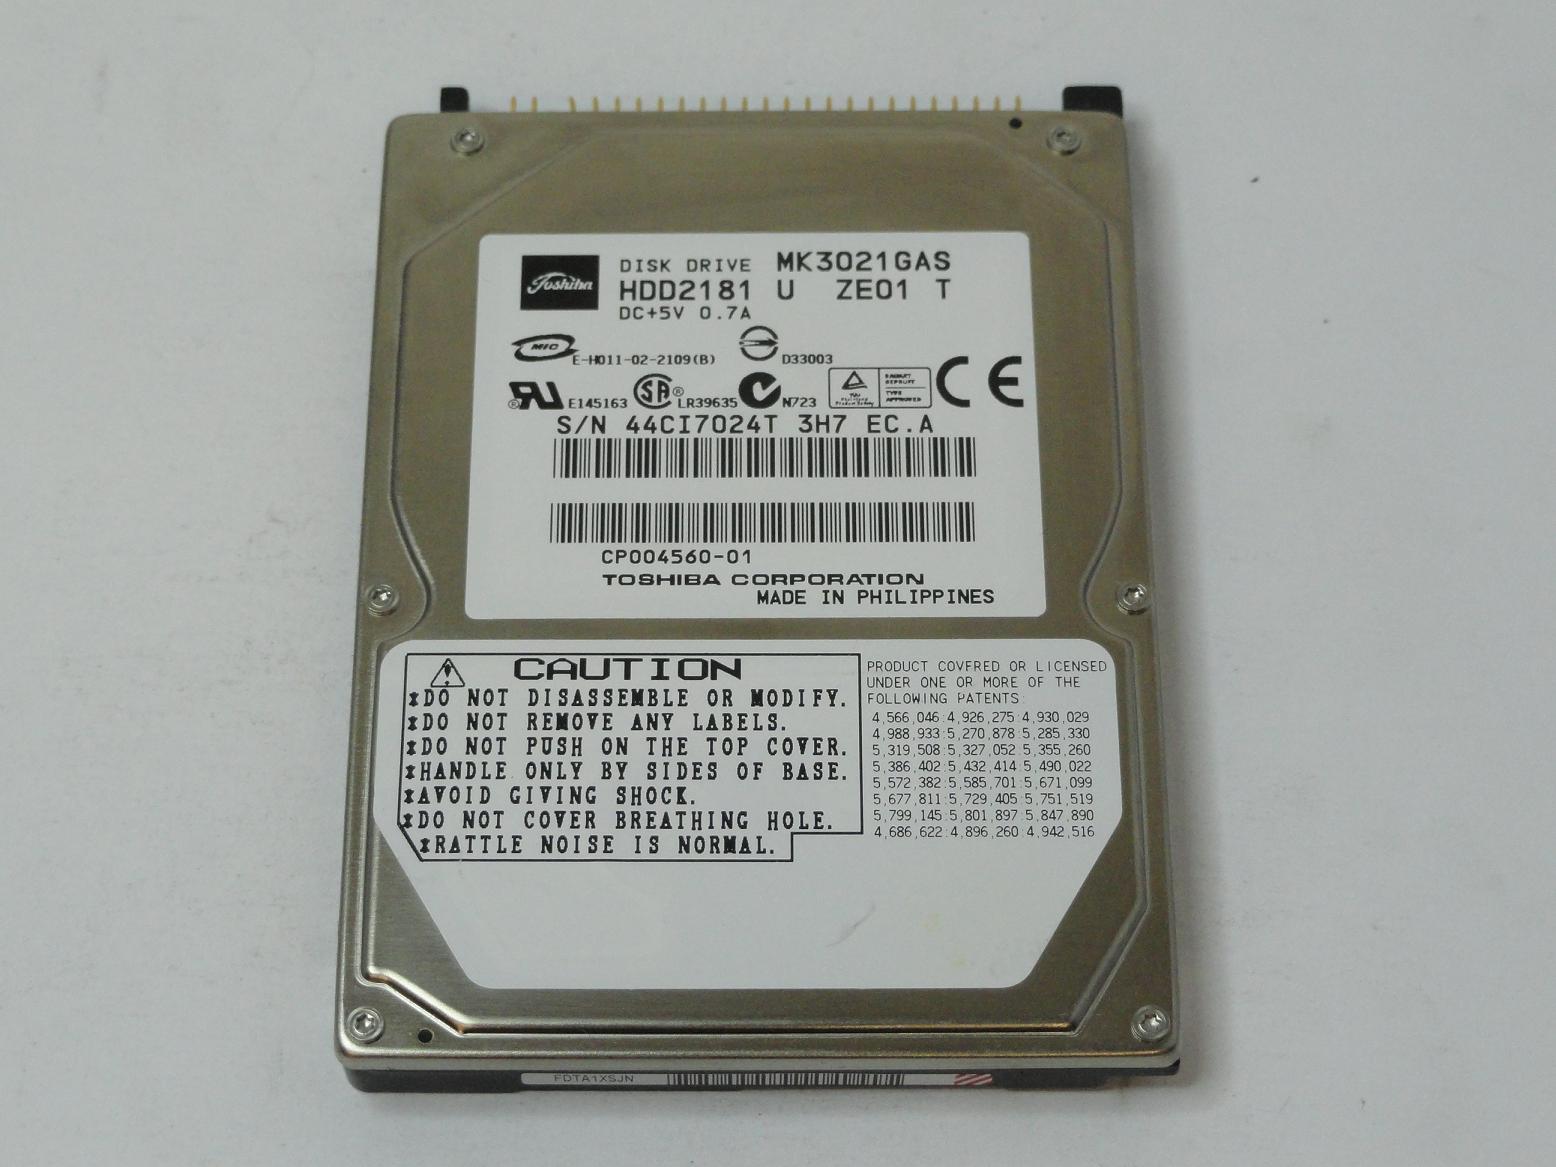 PR02841_HDD2181_Toshiba 30GB IDE 4200rpm 2.5in HDD - Image3